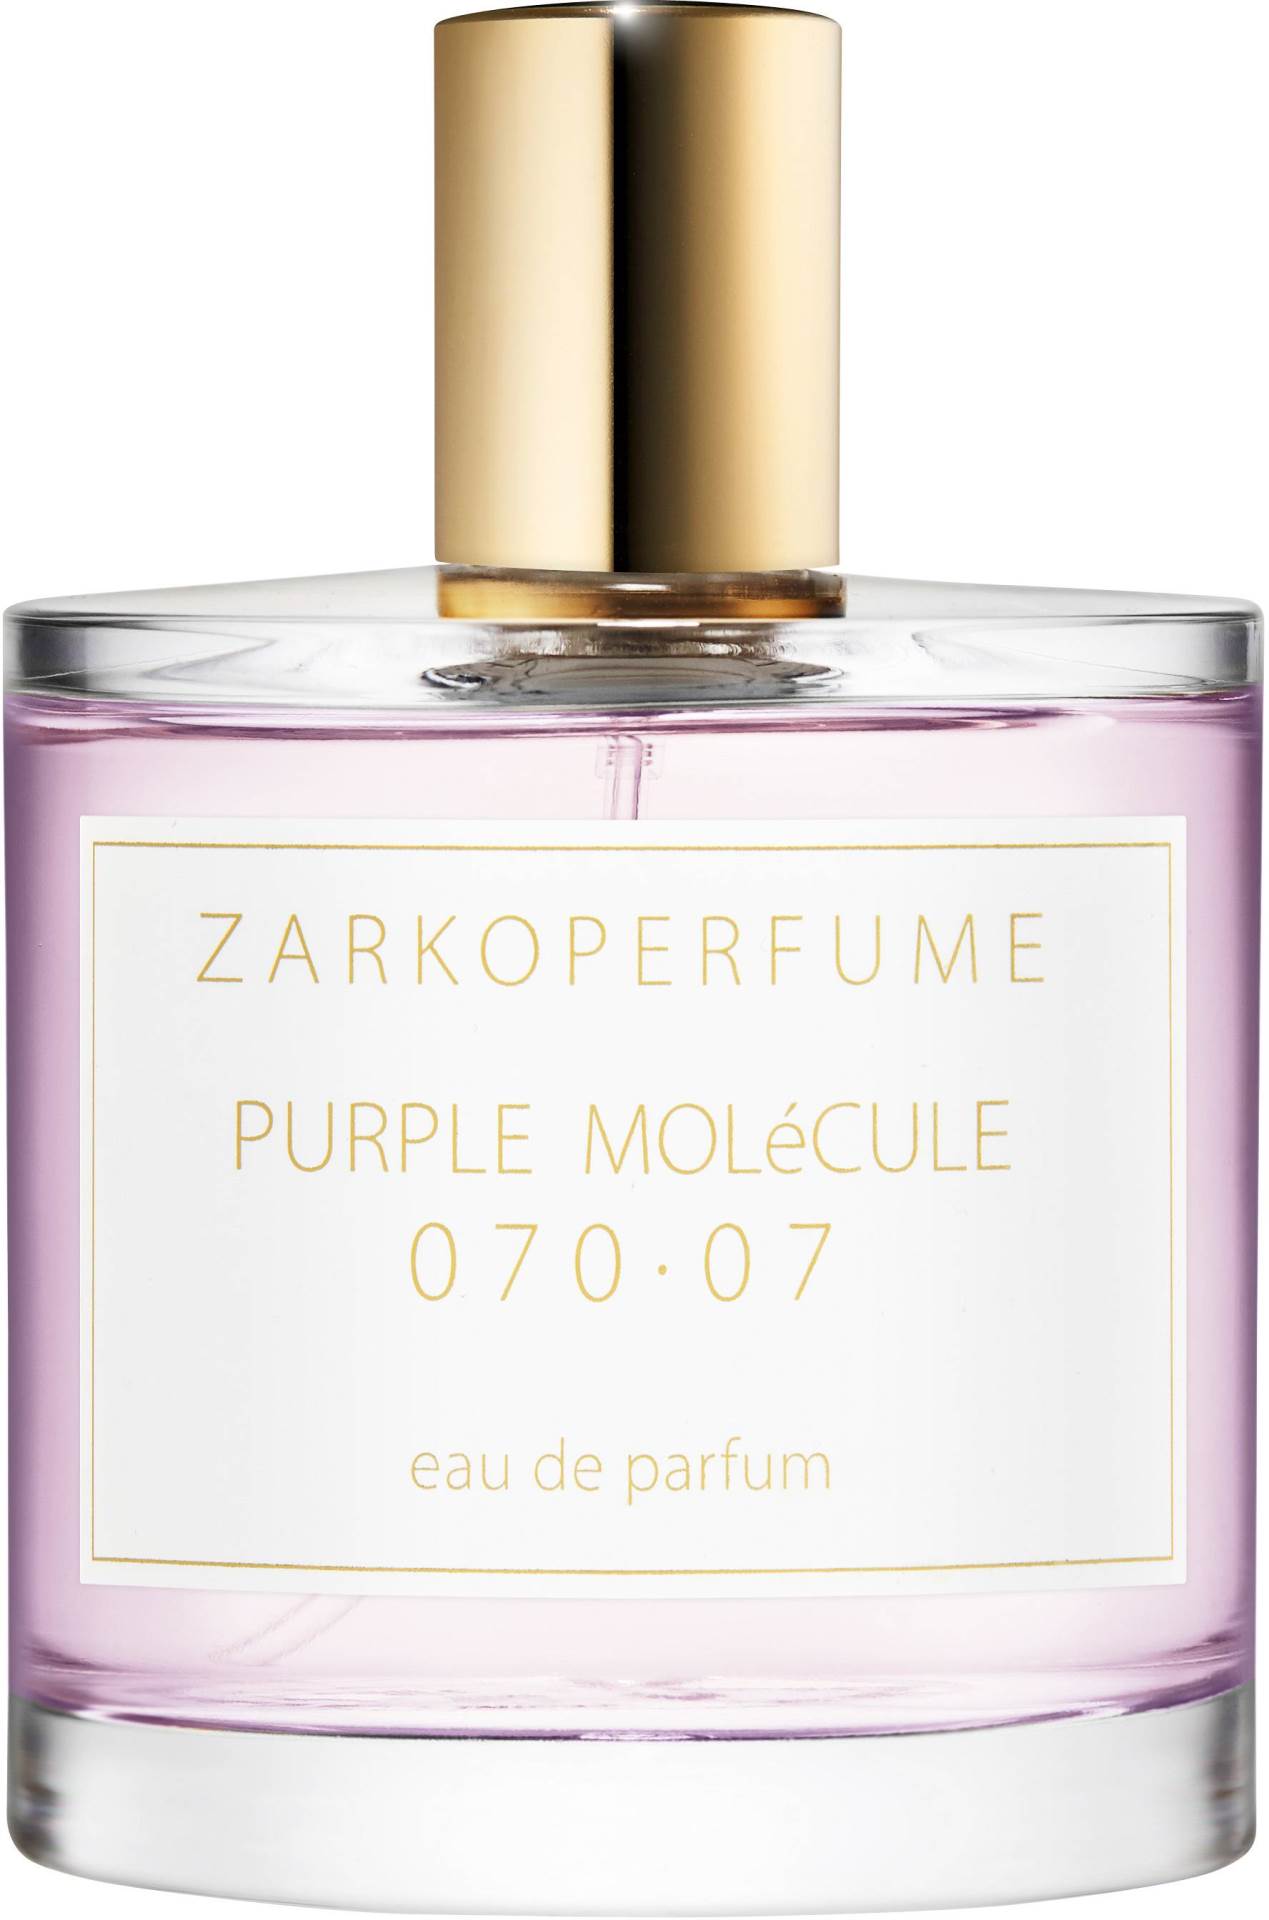 Zarkoperfume Purple Molecule 070.07 Eau de Parfum (100 ml), parfemska voda, 935 kn